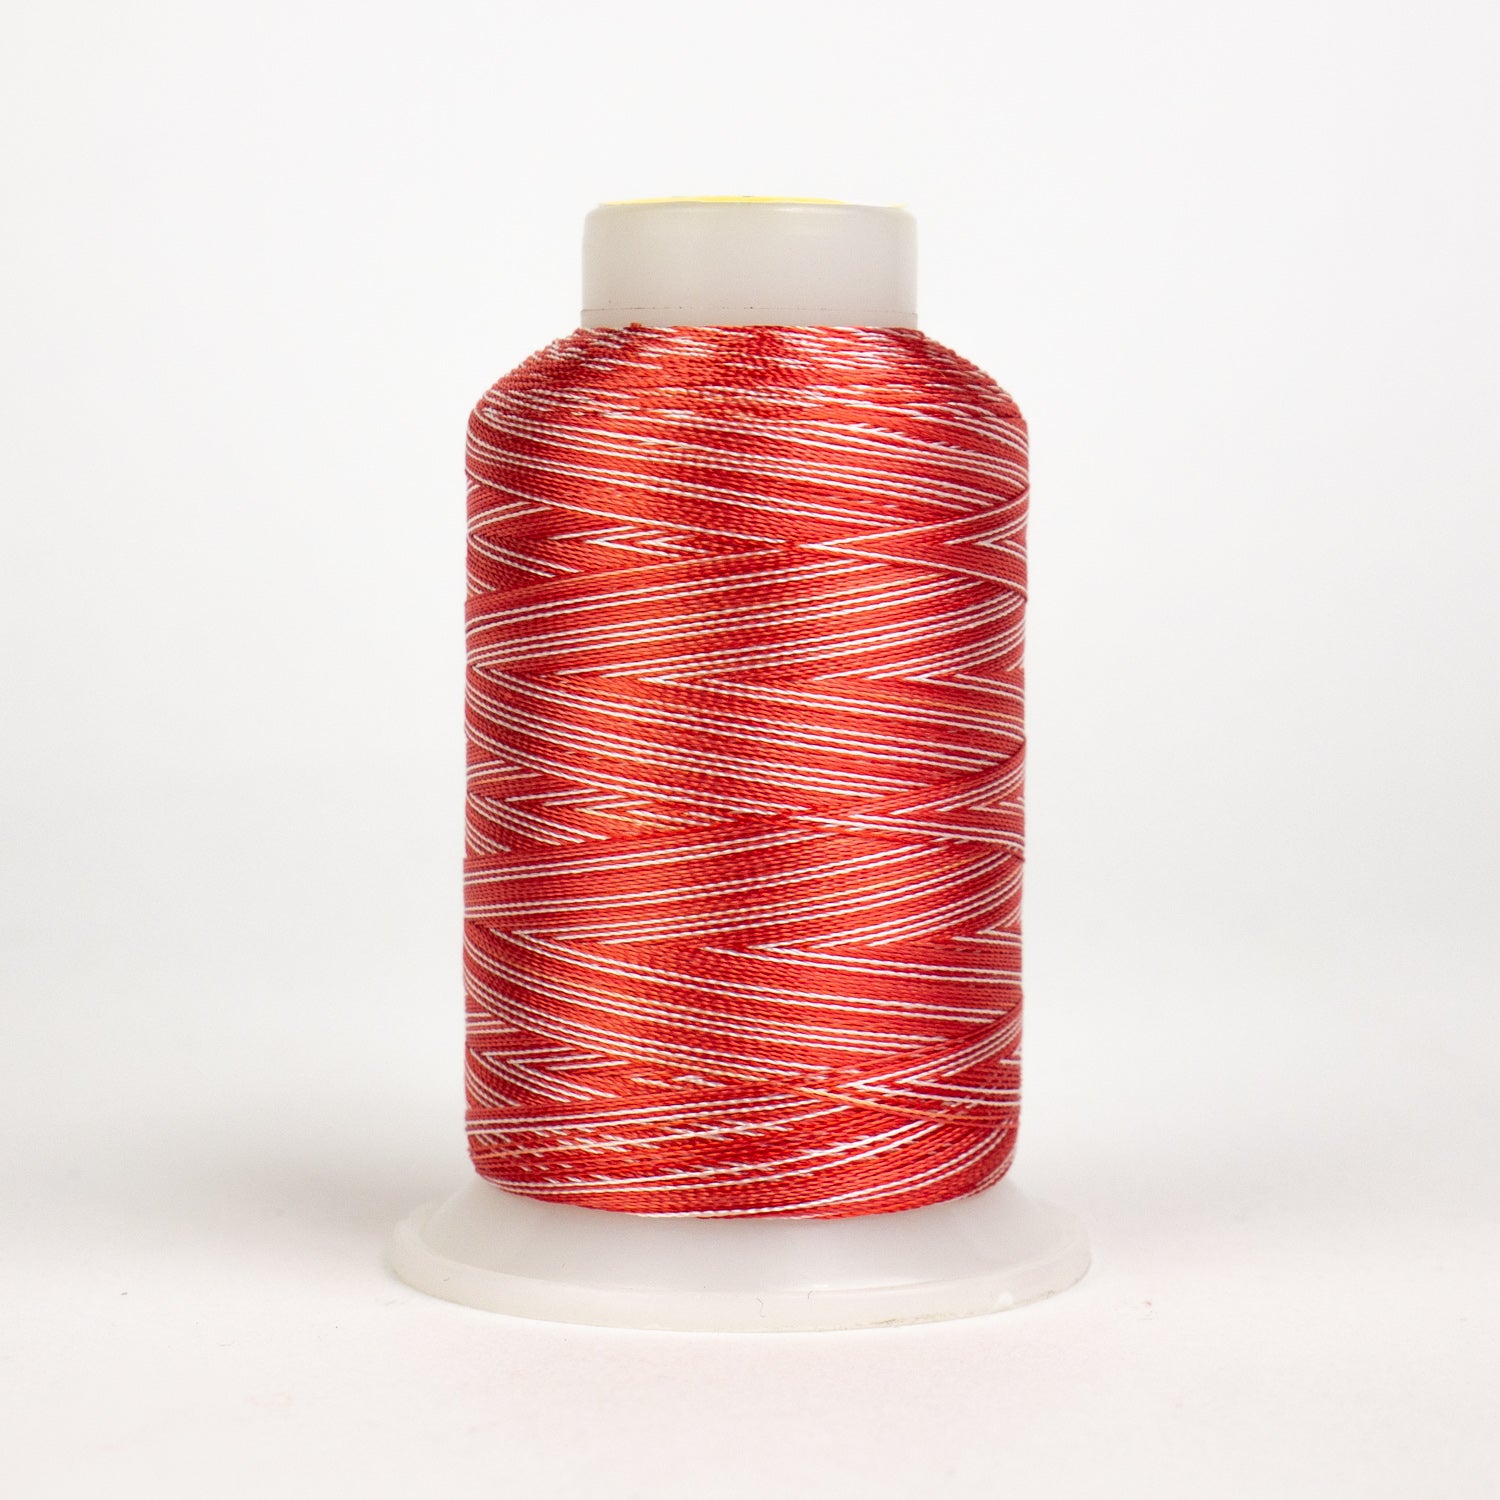 R8204 - Splendor‚Ñ¢ 40wt Rayon Red White Thread WonderFil